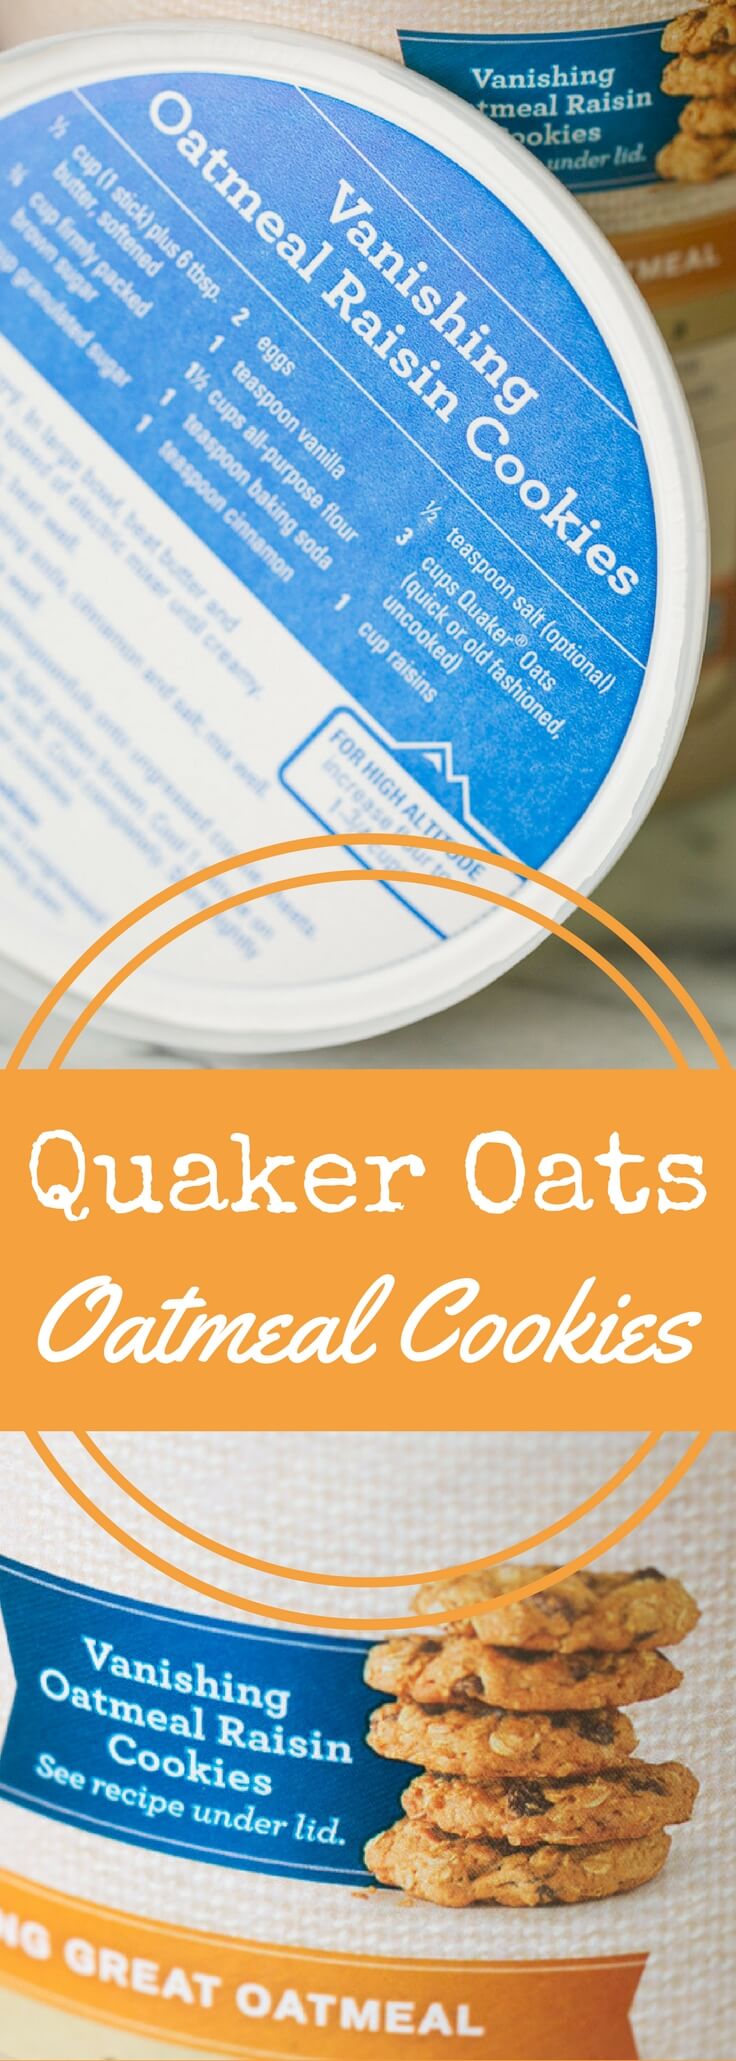 Quaker Oatmeal Cookies